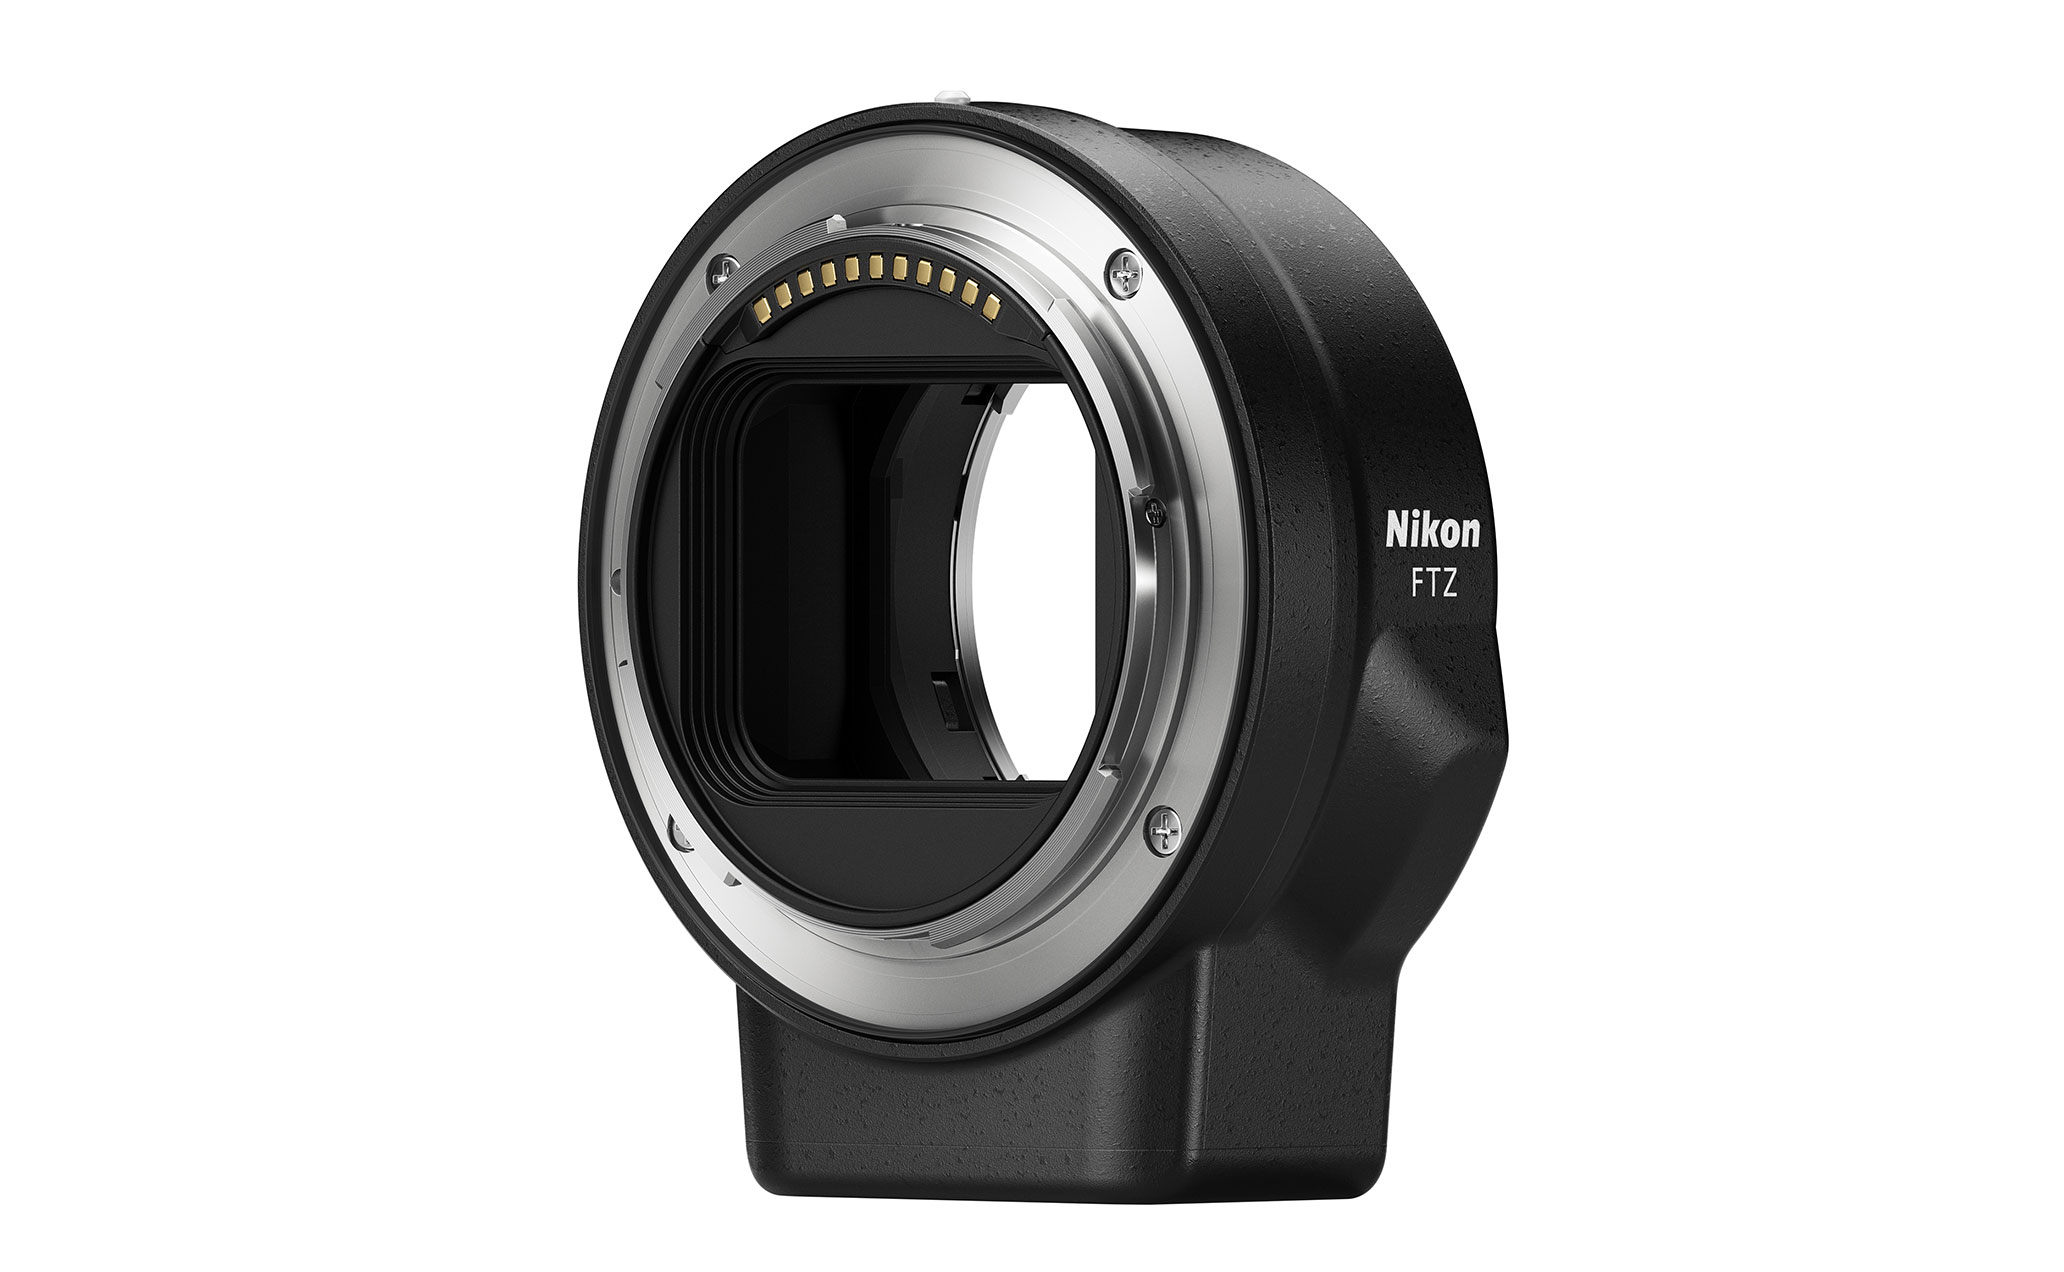 Mount Adapter FTZ | Accessories | Nikon Consumer